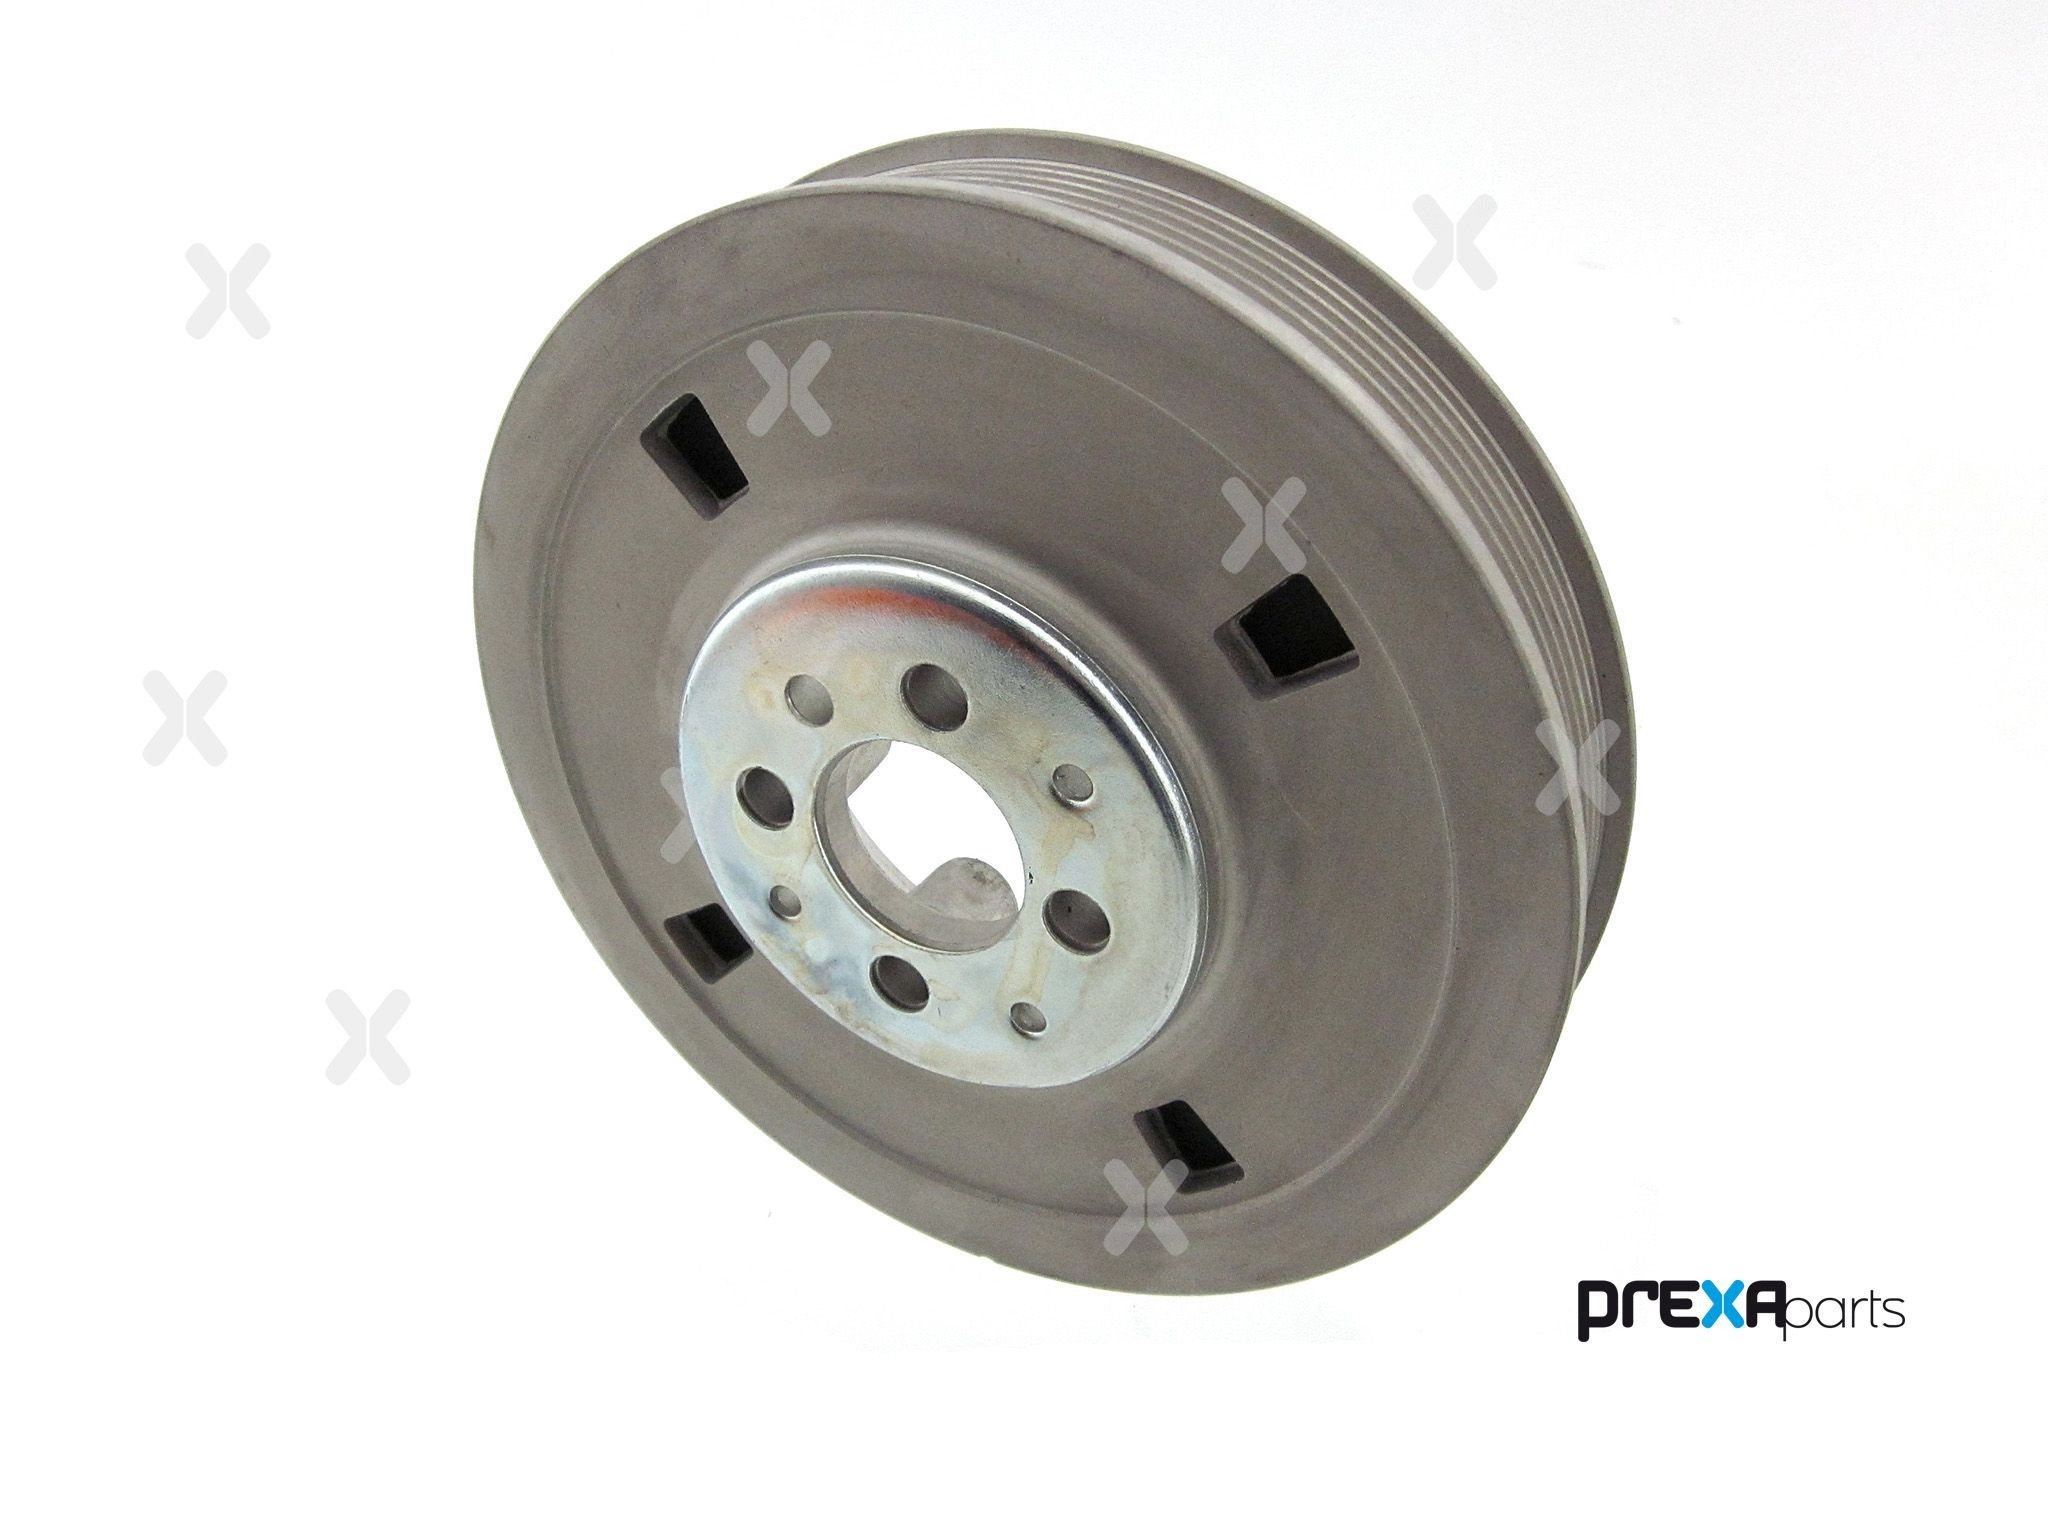 Crank pulley PREXAparts P125002 rating